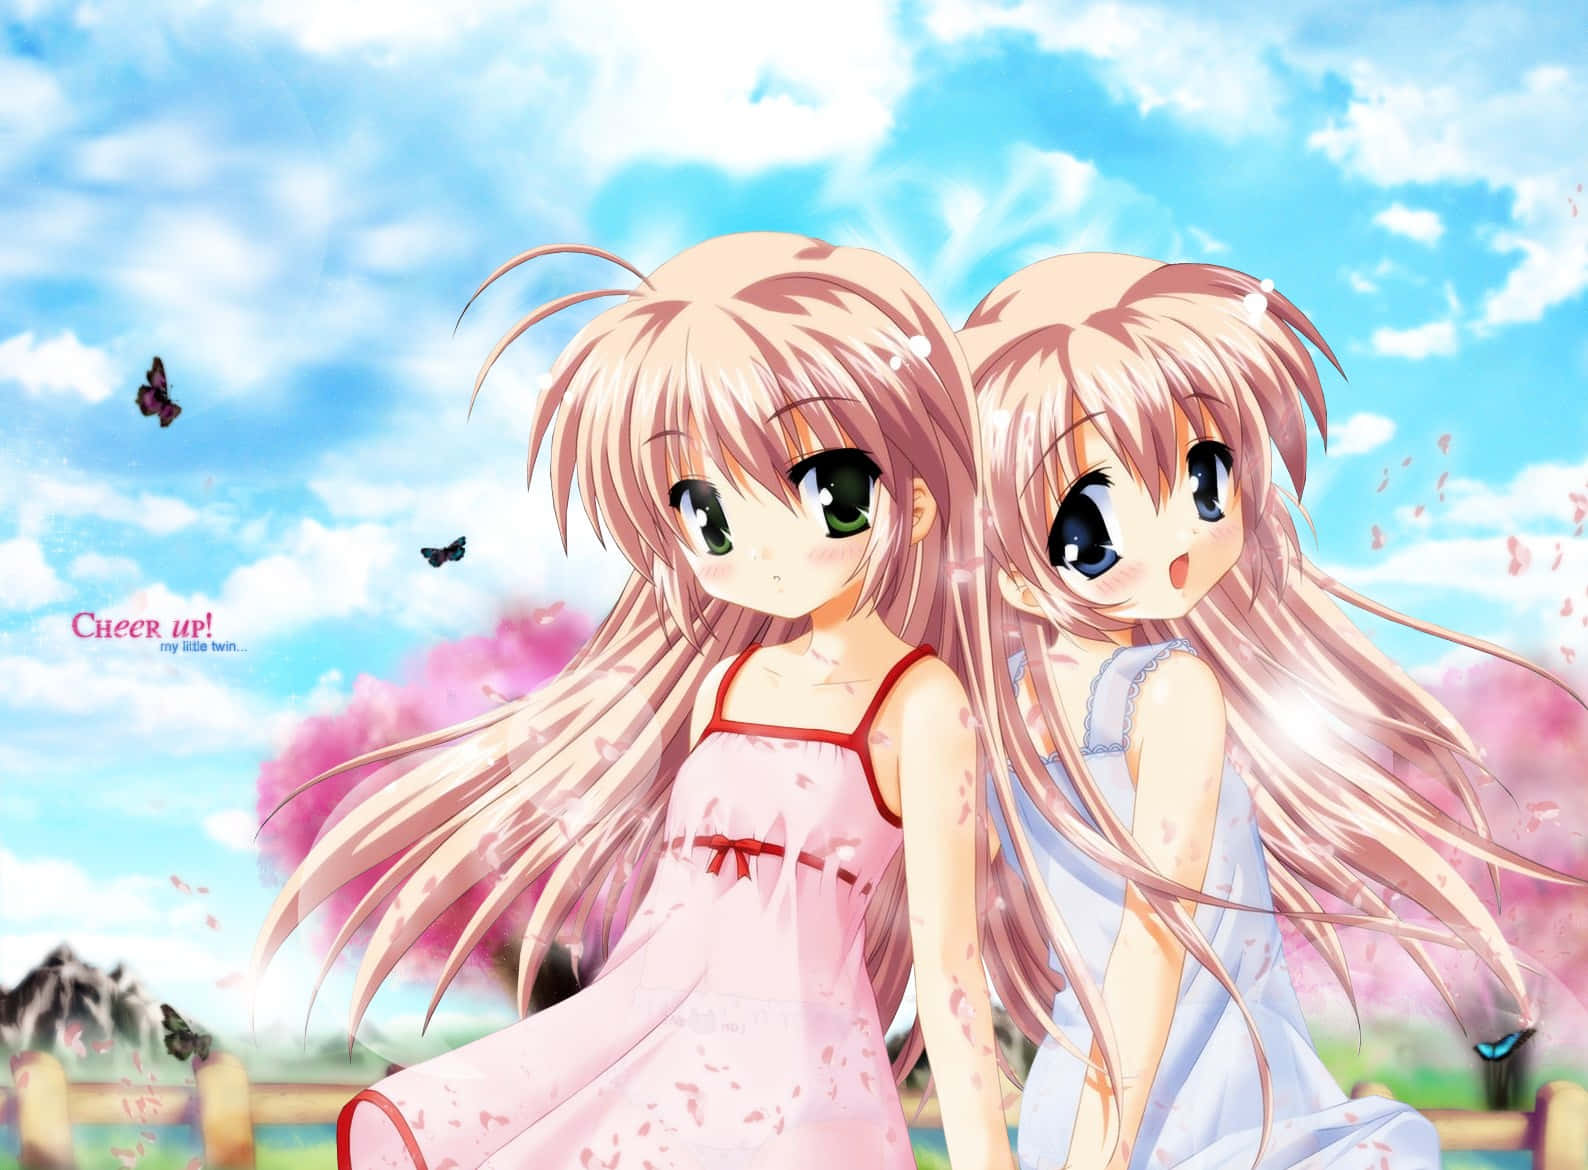 Dazzling Anime Digital Artwork Of Cute Sisters Background